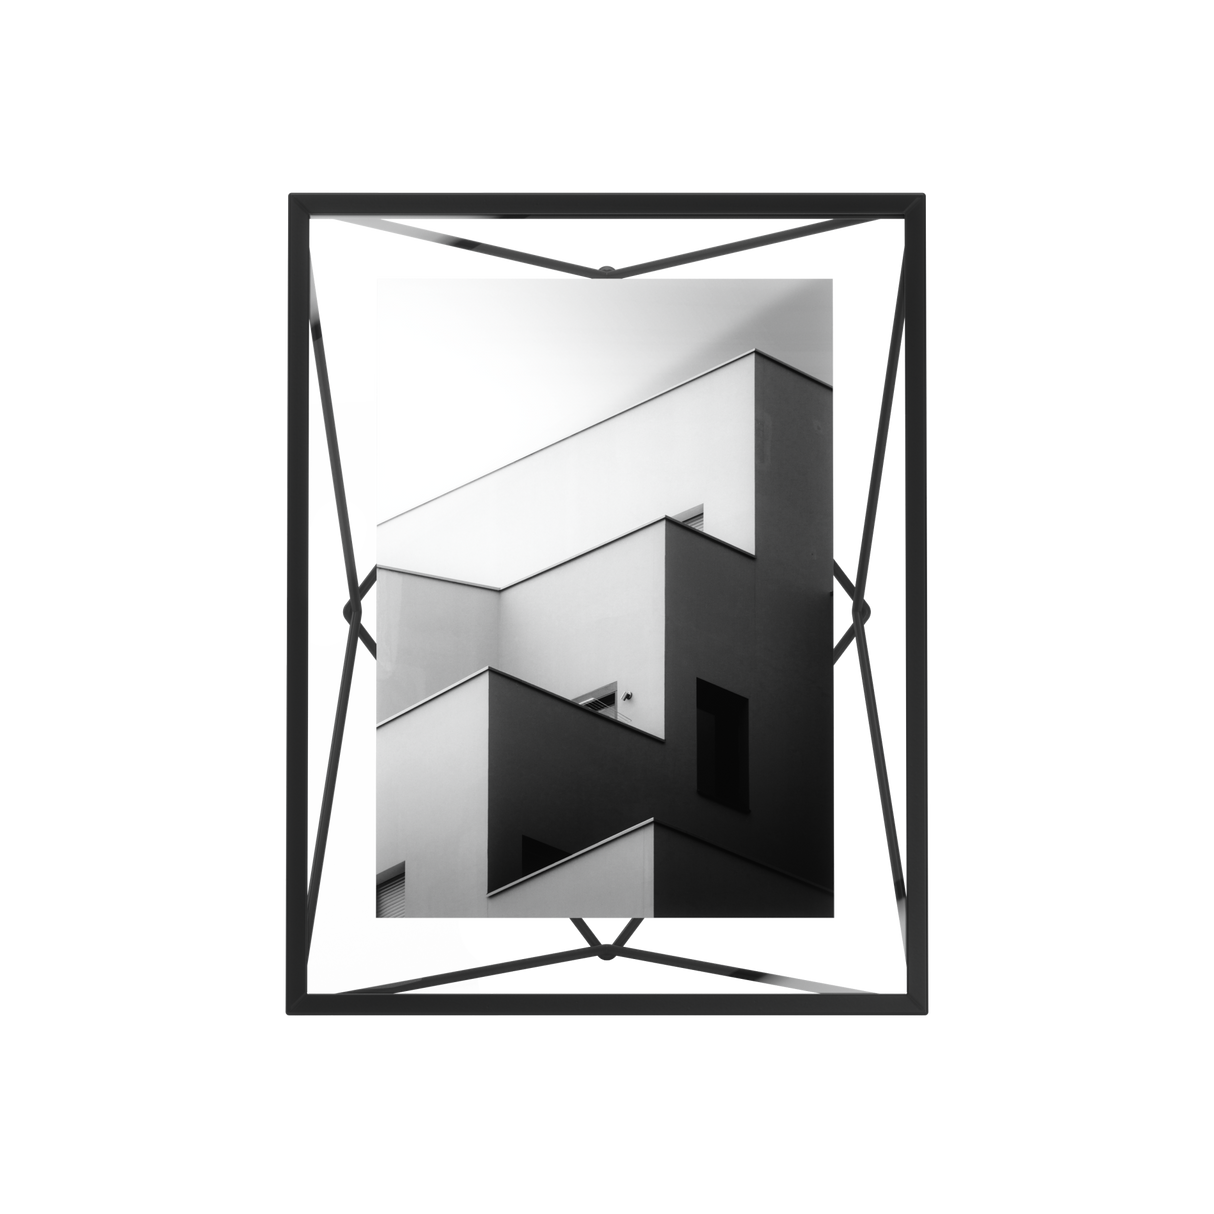 Tabletop Frames | color: Black | size: 5x7" (13x18 cm)